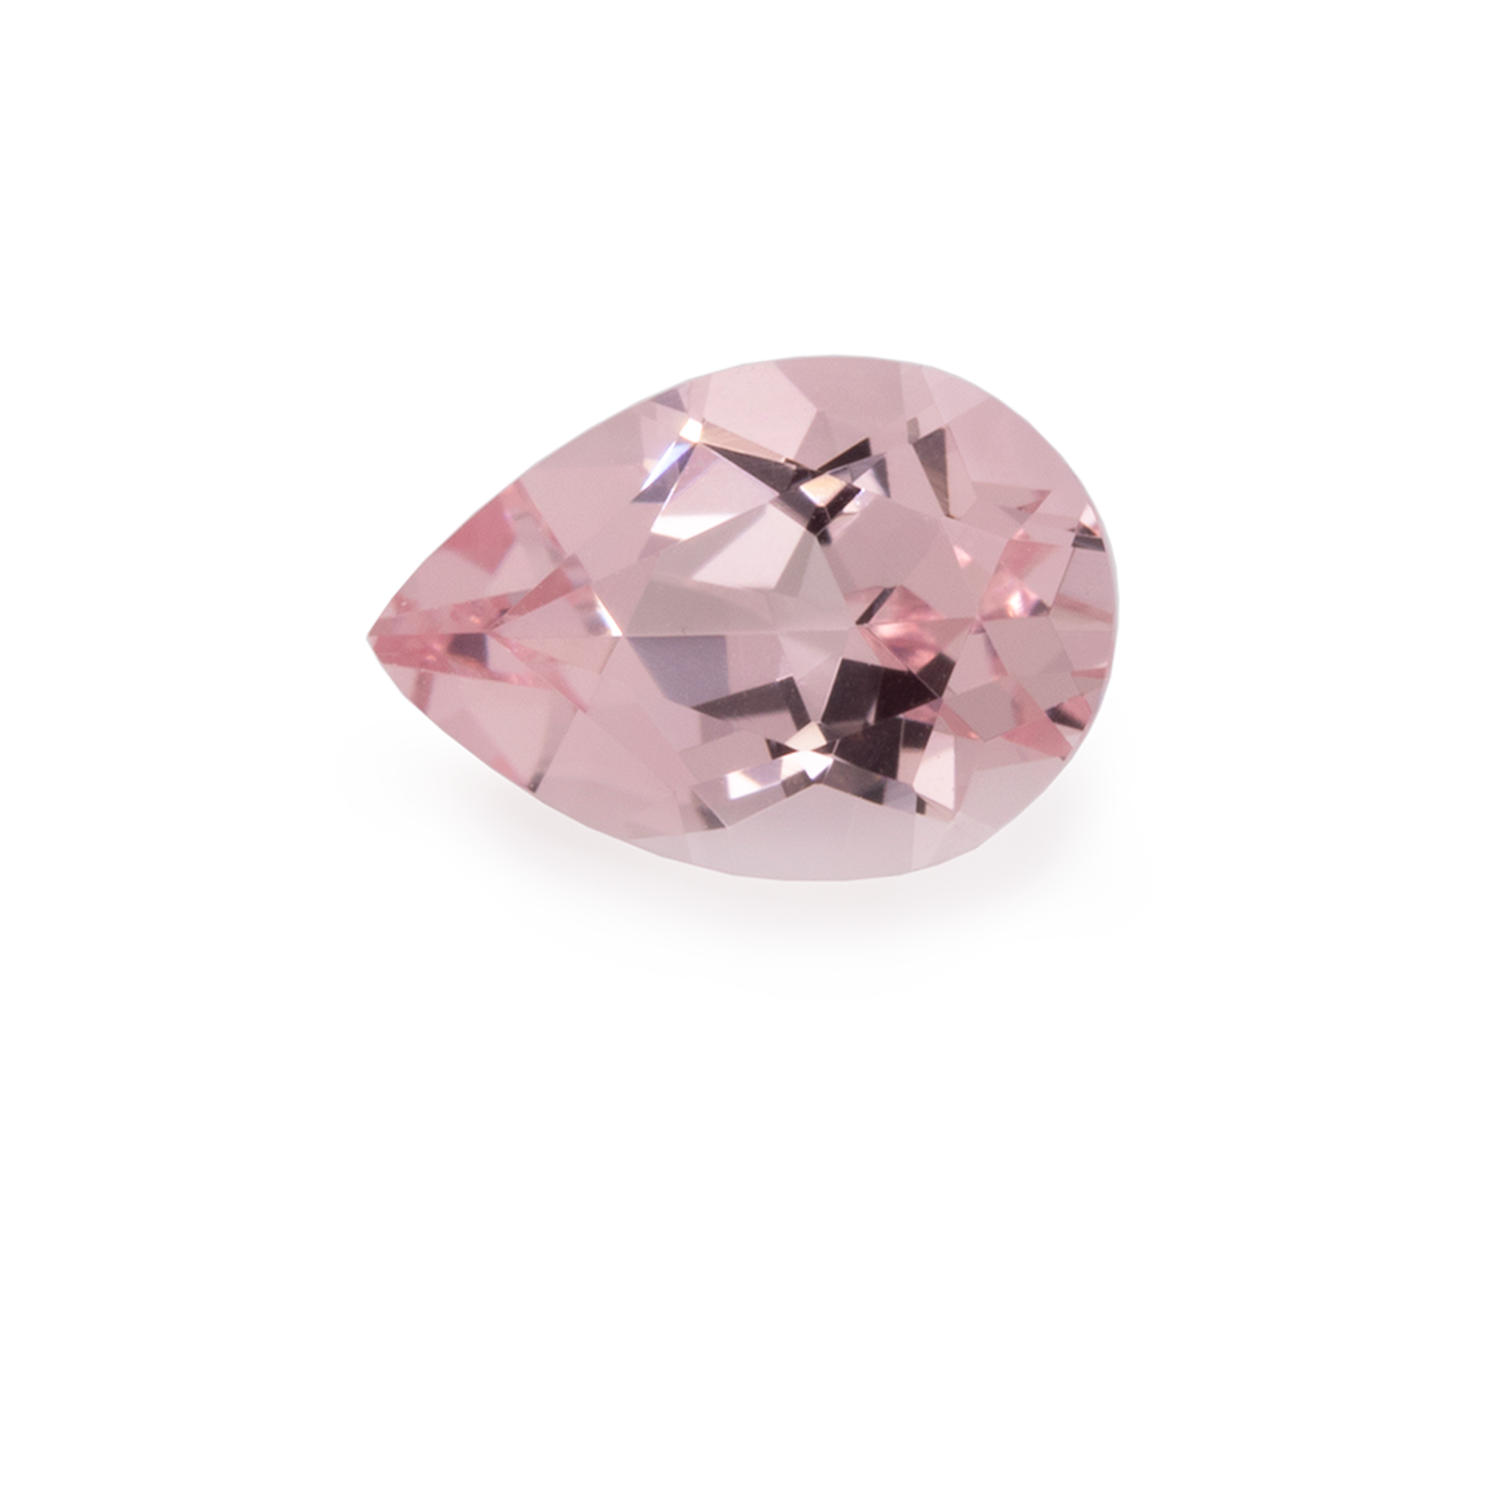 Morganite - pink, pearshape, 7x5 mm, 0.58-0.64 cts, No. MO20001